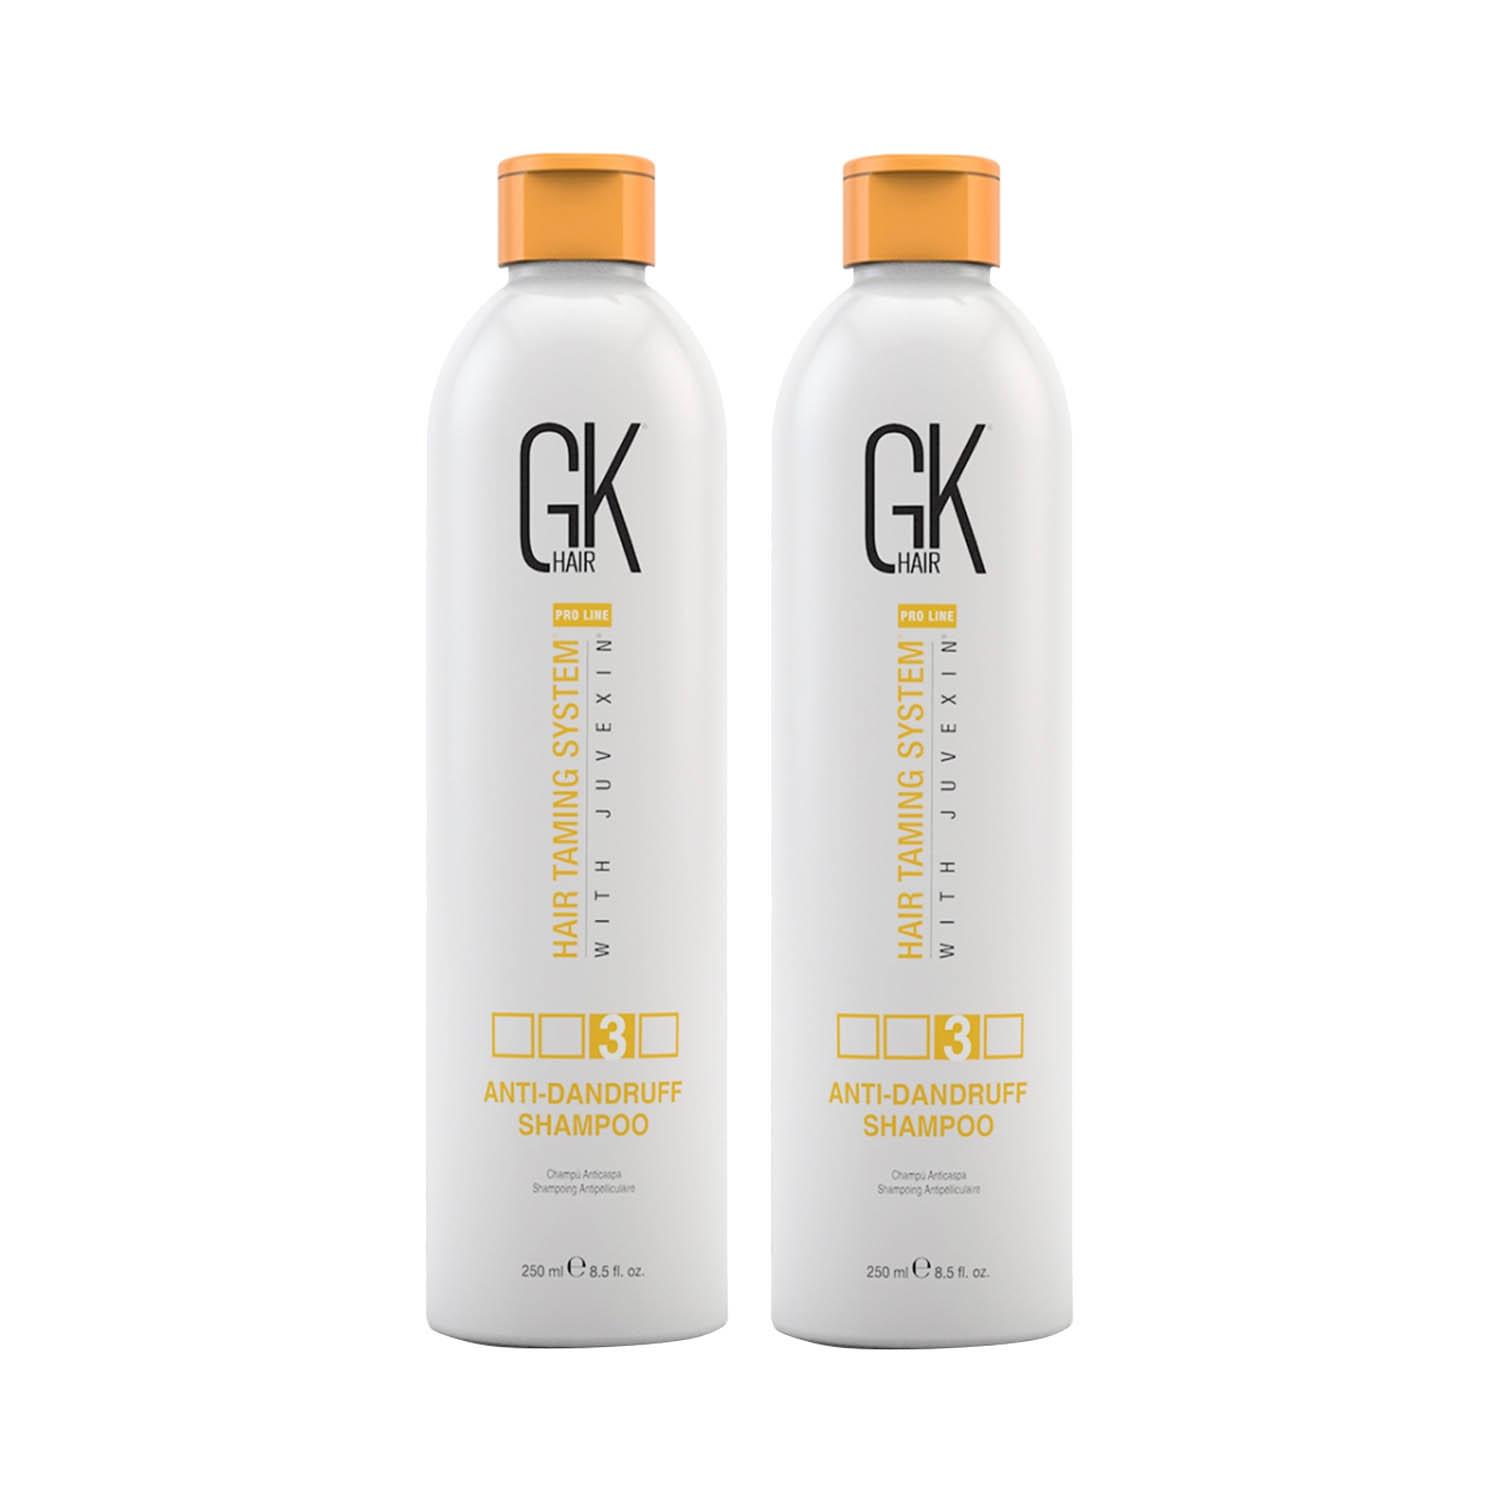 GK Hair Anti Dandruff Shampoo 250ml - Pack of 2